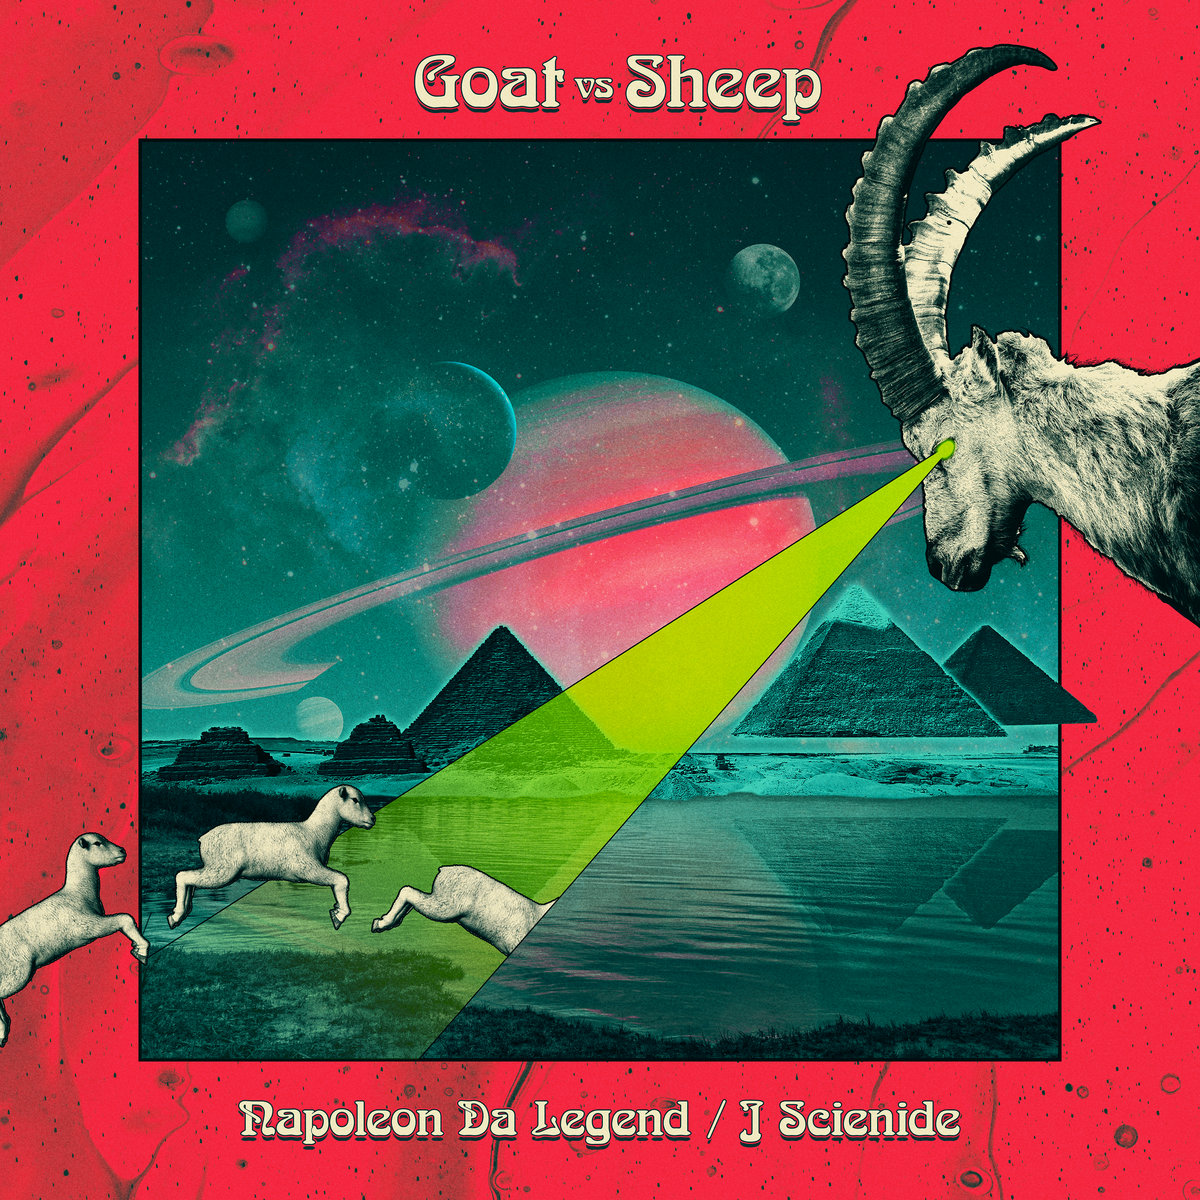 Goat_vs_sheep_napoleon_da_legend___j_scienide